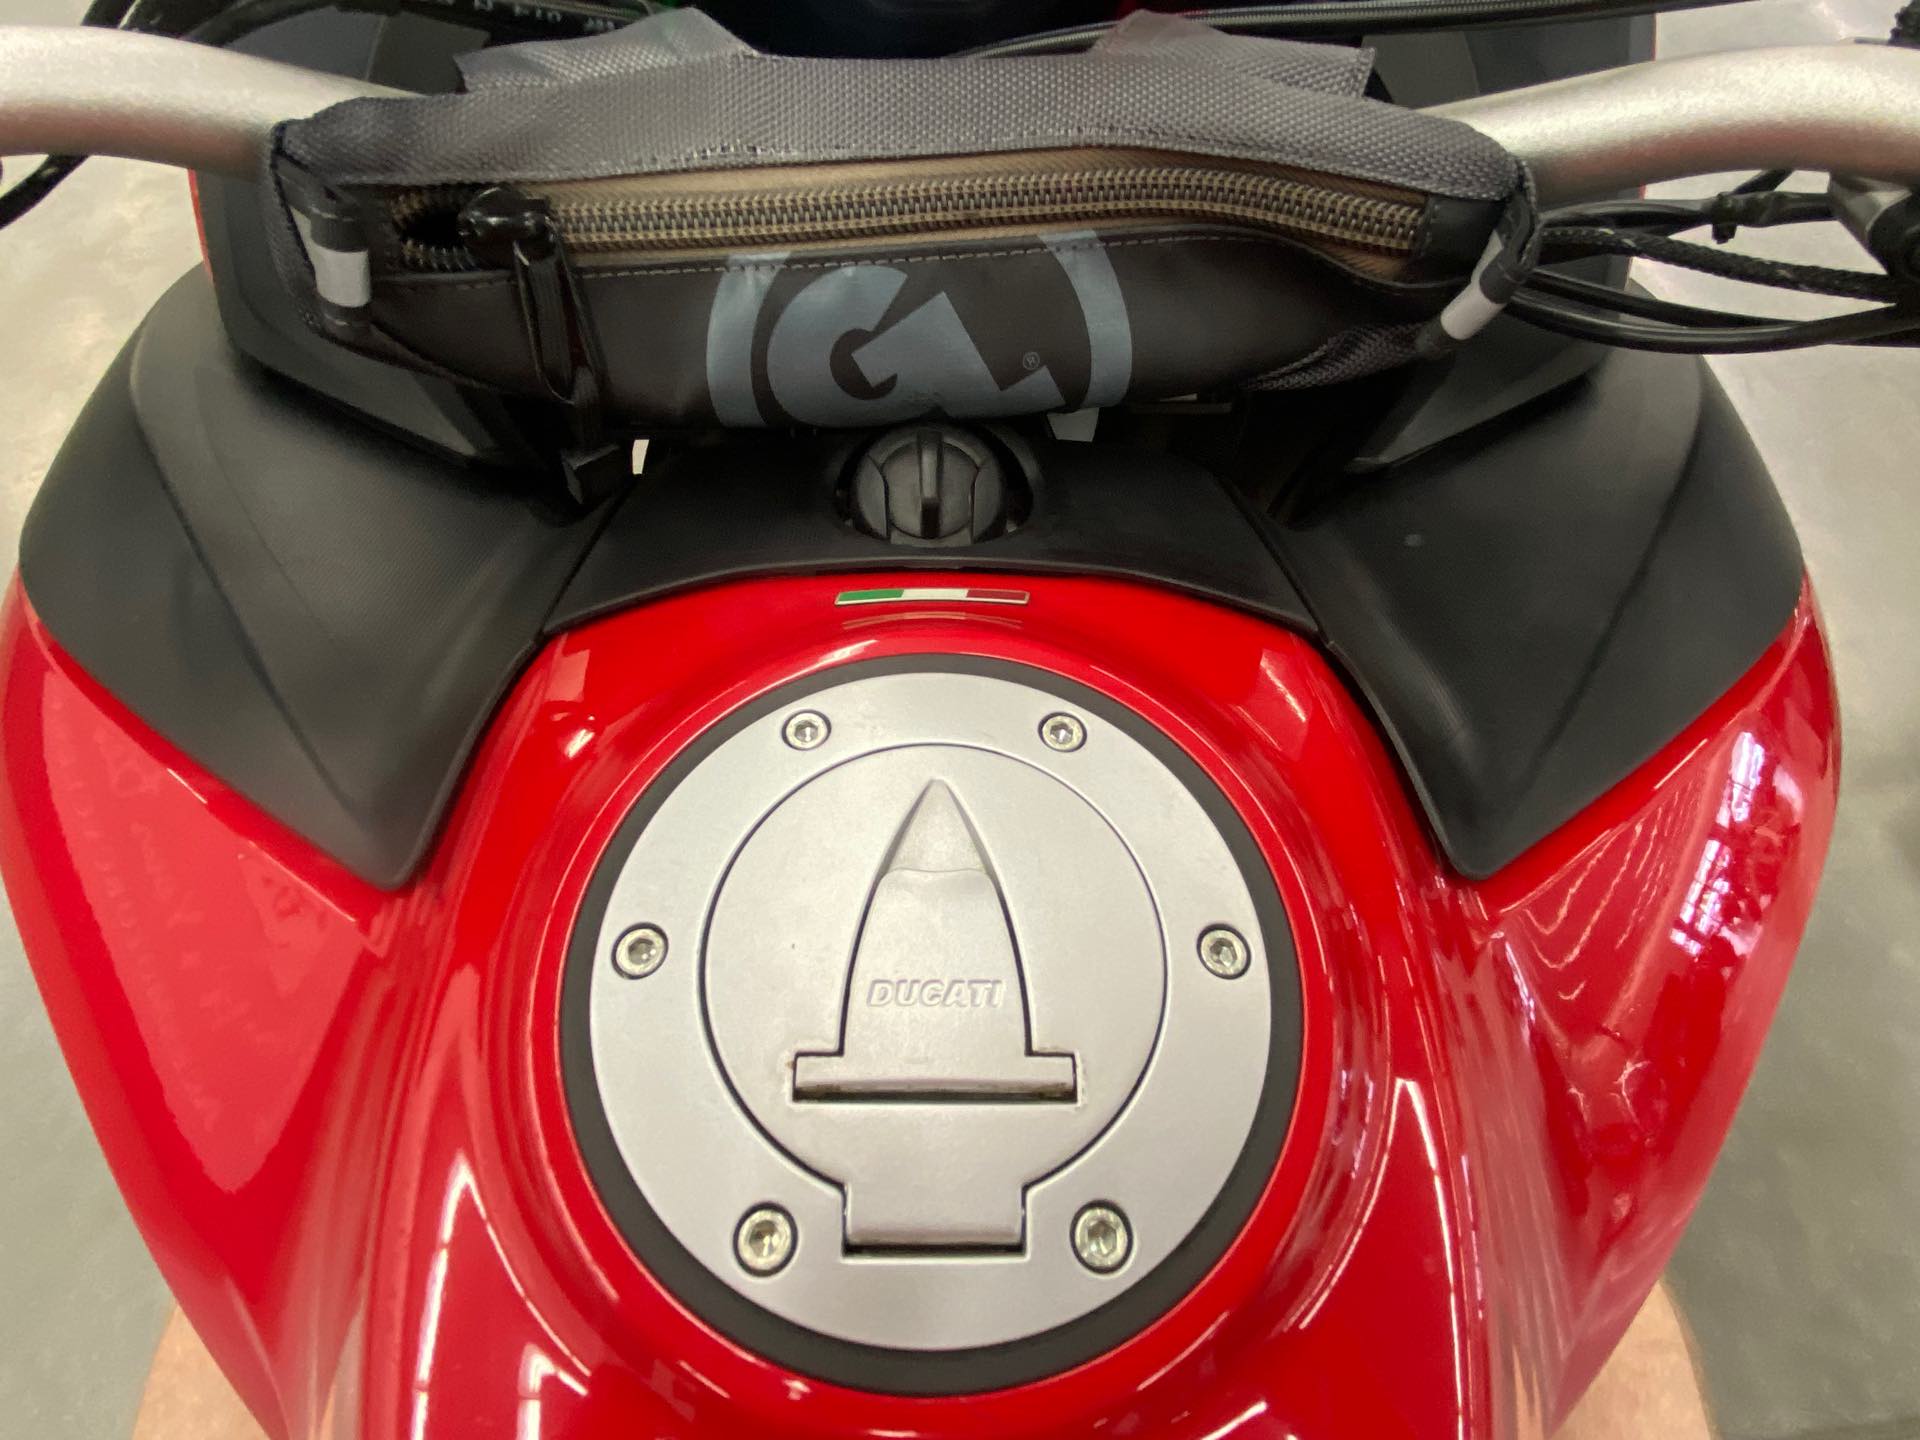 2017 Ducati Multistrada 1200 S at Aces Motorcycles Denver 